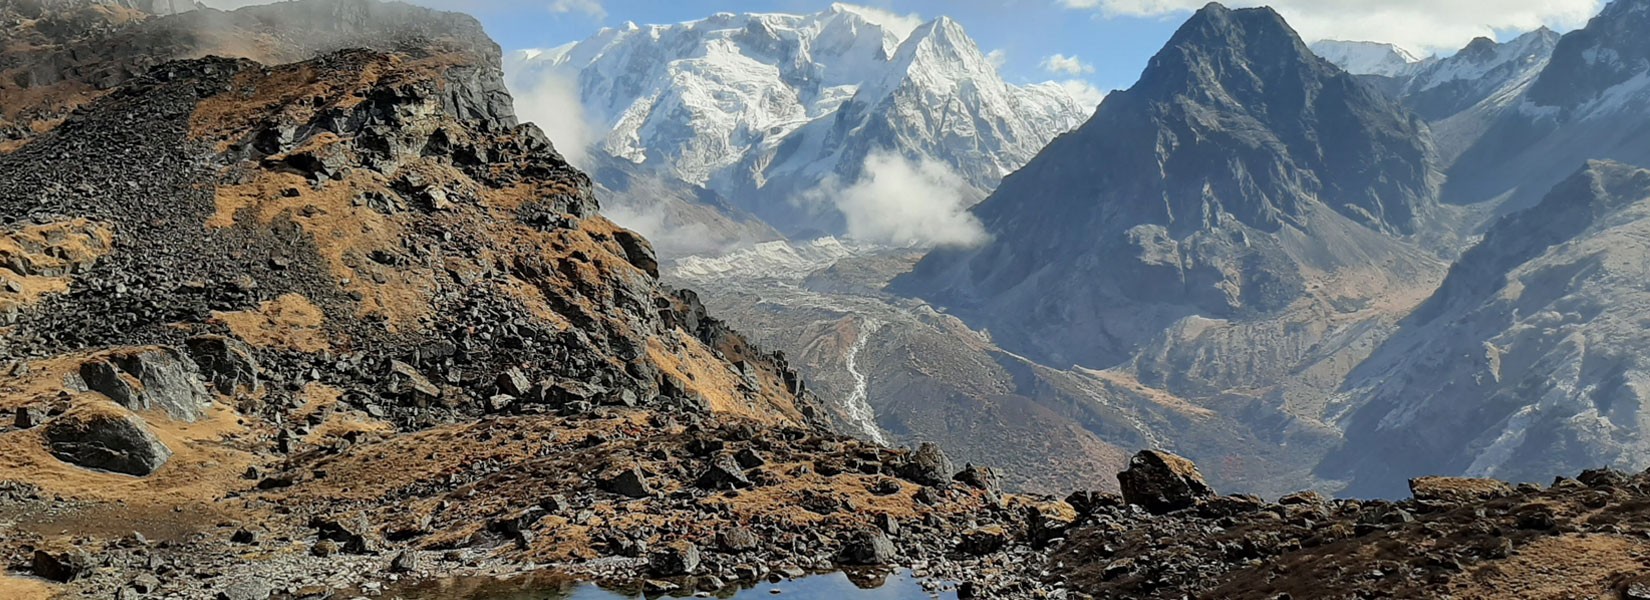 8 reasons why you should do the Kanchenjunga Base Camp Trek